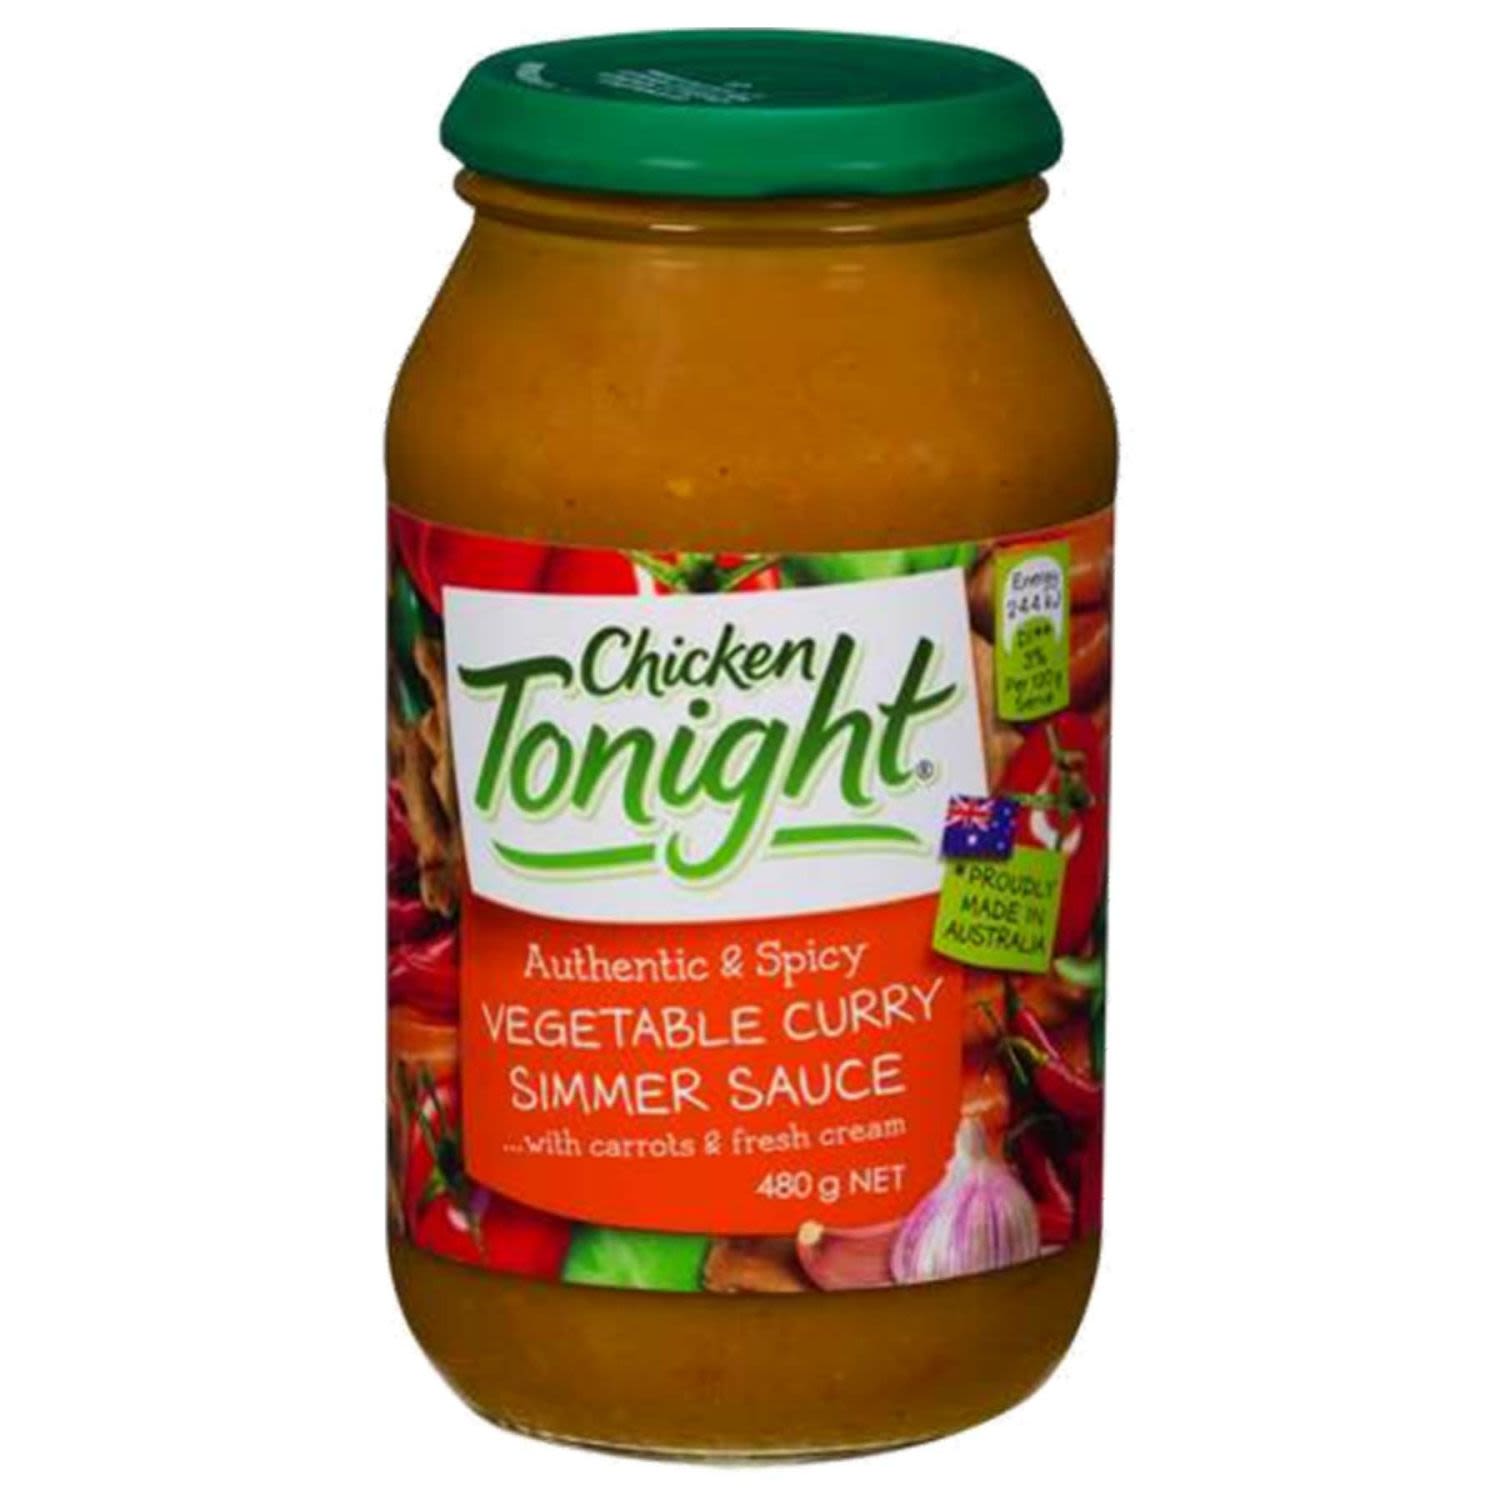 Chicken Tonight Vegetable Curry Simmer Sauce, 480 Gram